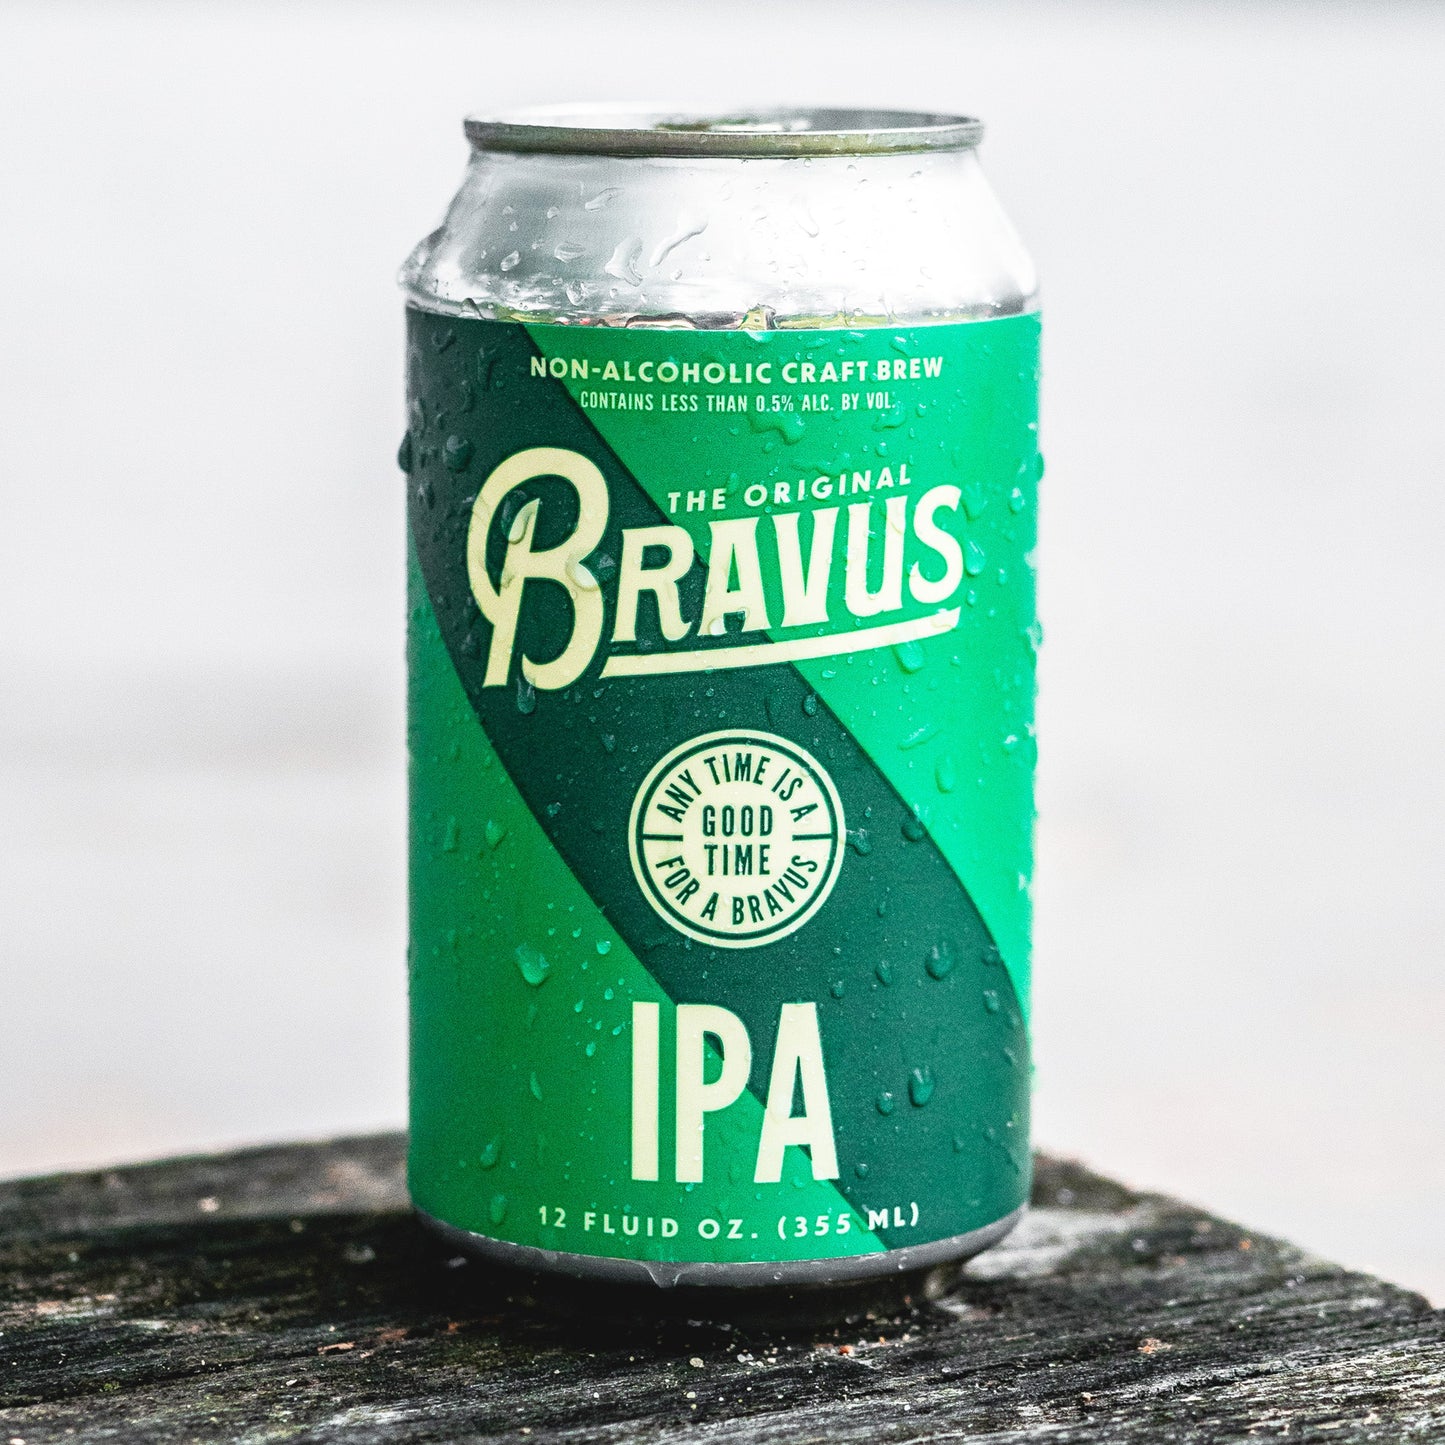 West Coast IPA by Bravus Brewing Company